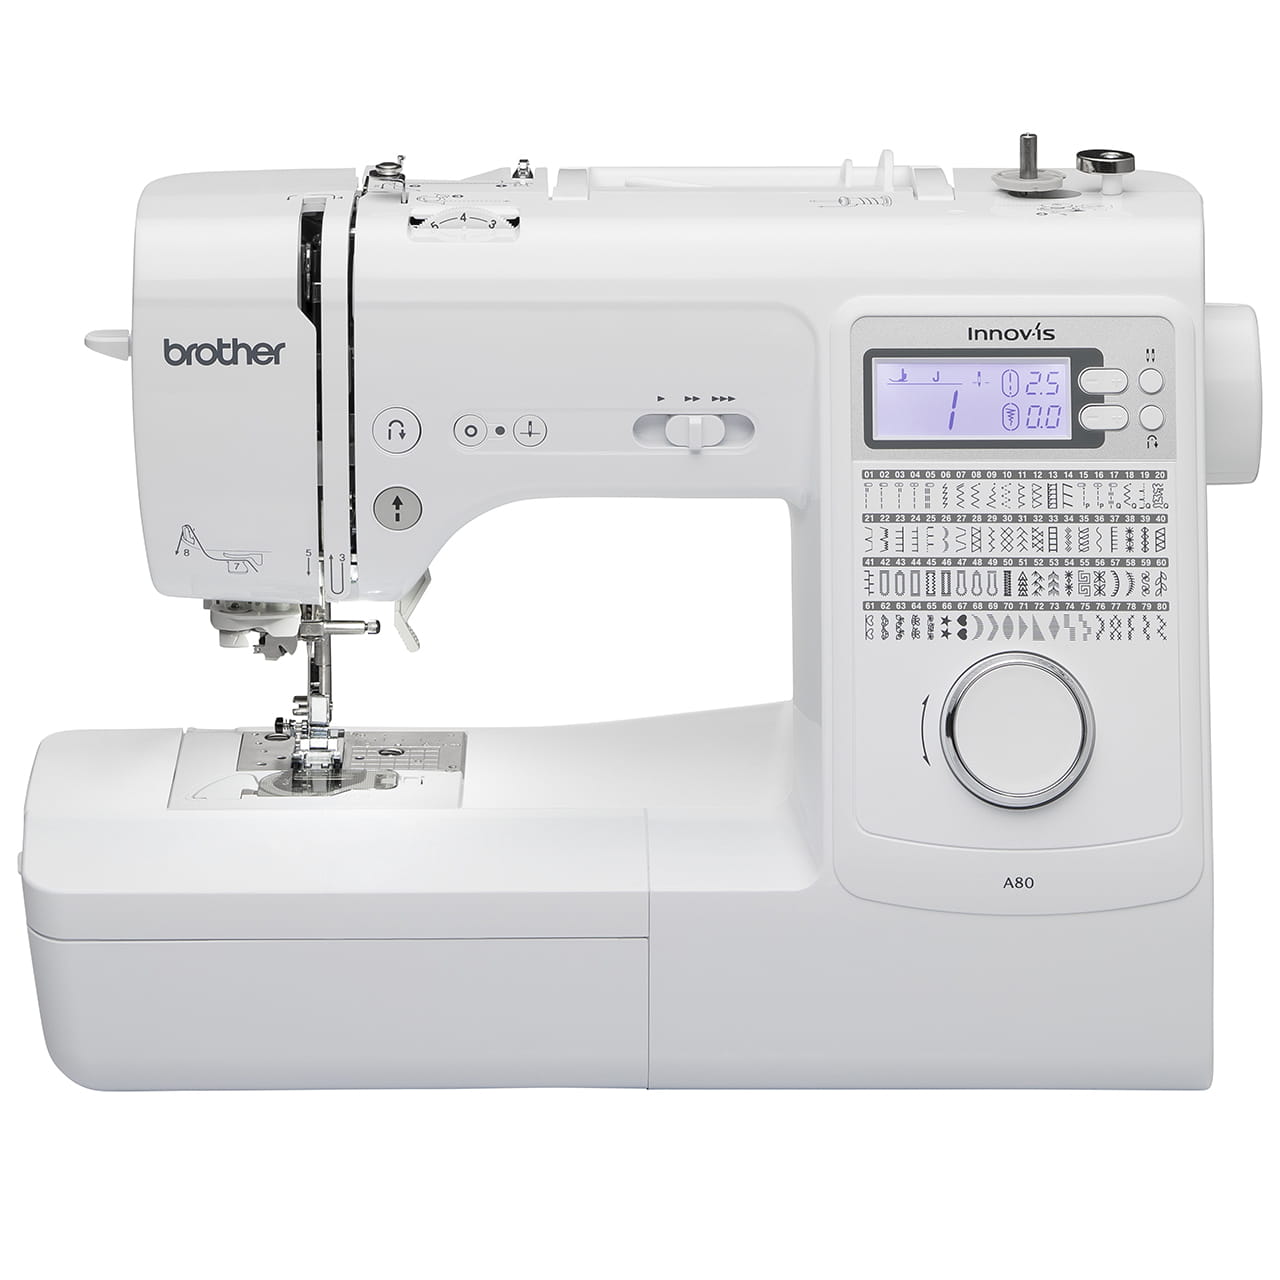 category-big-sewing-machine